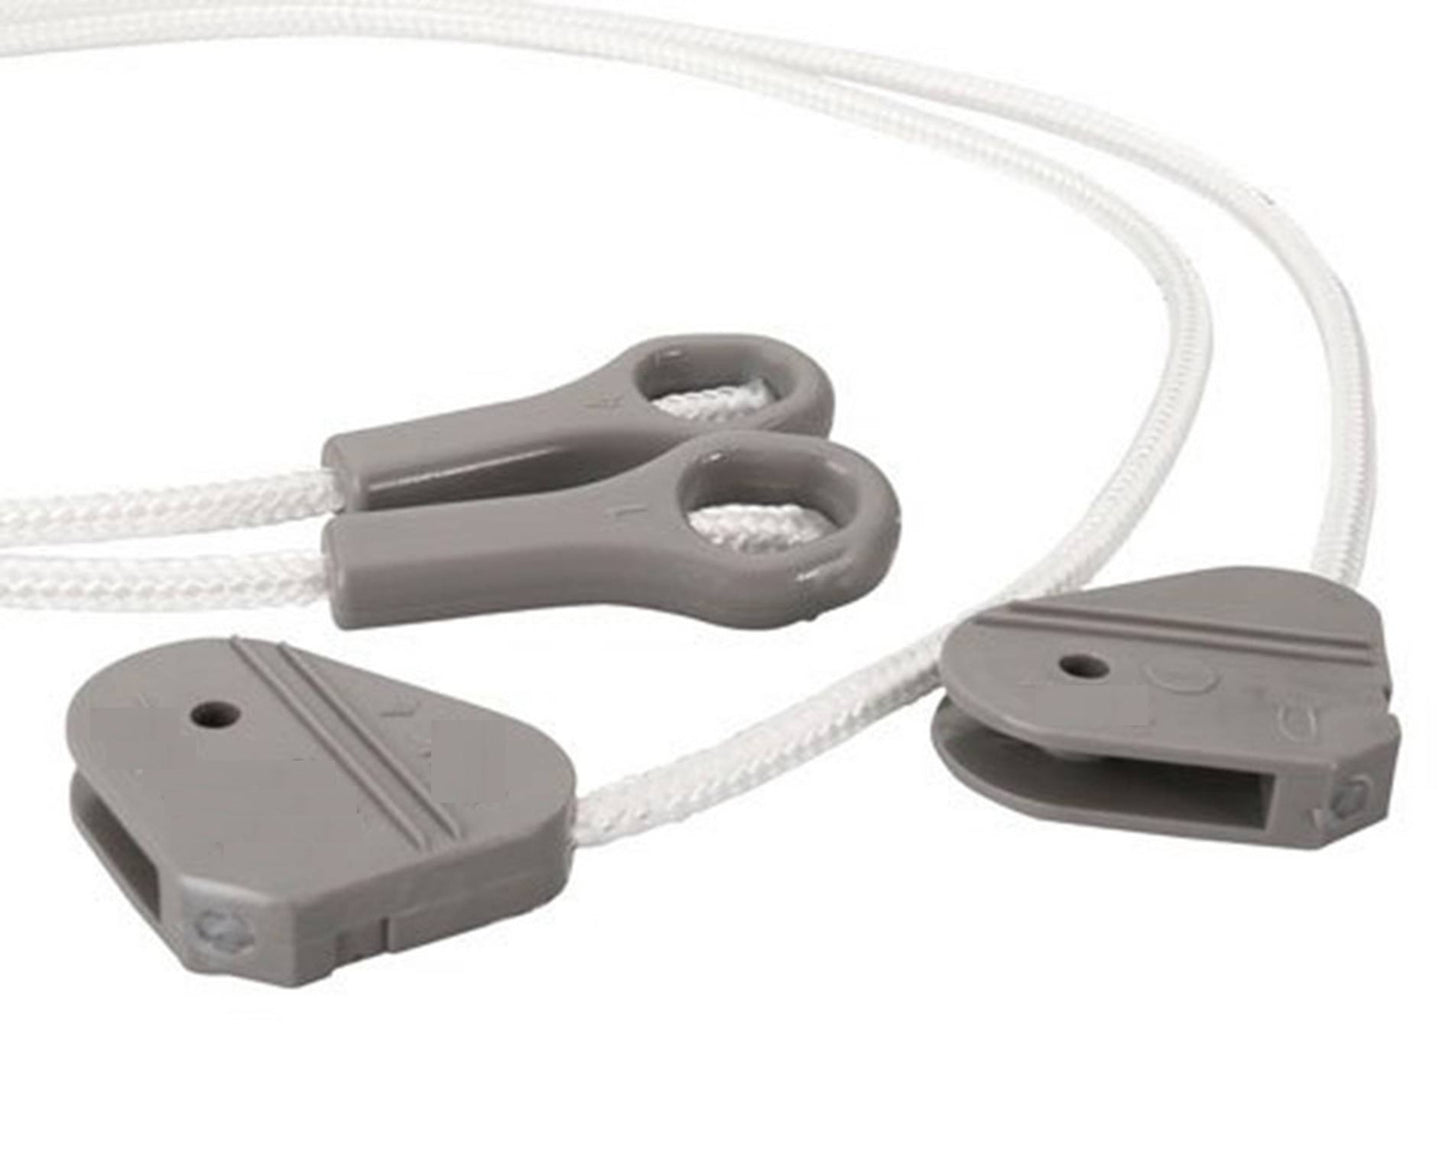 2 x Dishwasher Door Hinge Brake Cord Rope Cable for Zanussi, Ikea, Prima, De Dietrich